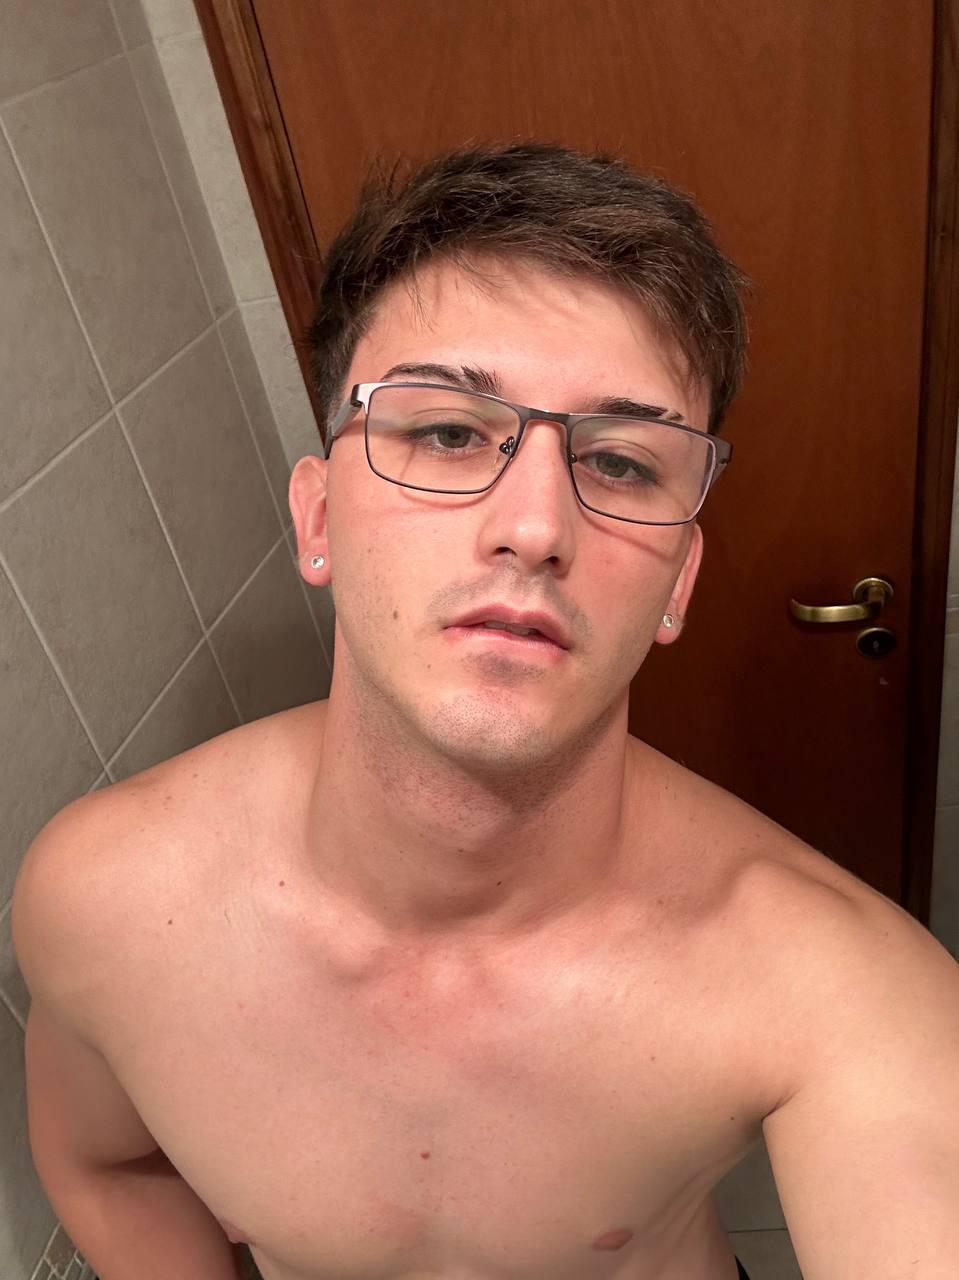 Glasses or no